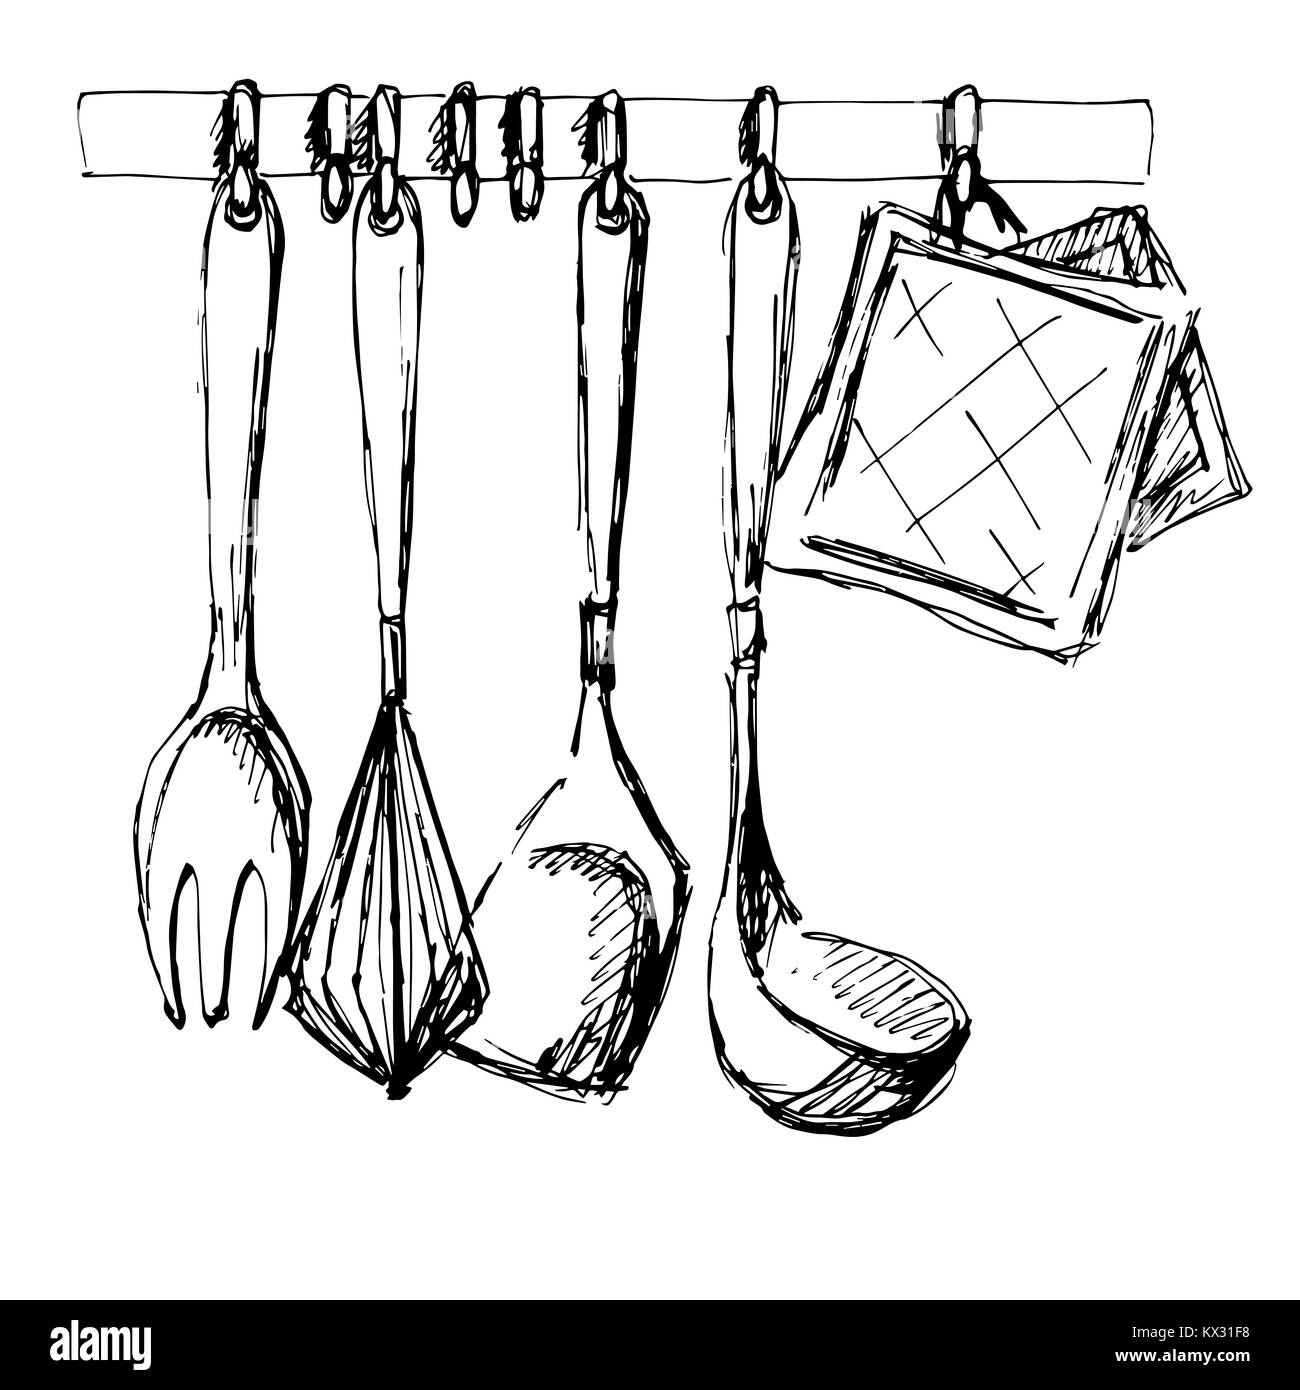 Cooking work background kitchen utensils sketch vectors stock in format for  free download 2.12MB